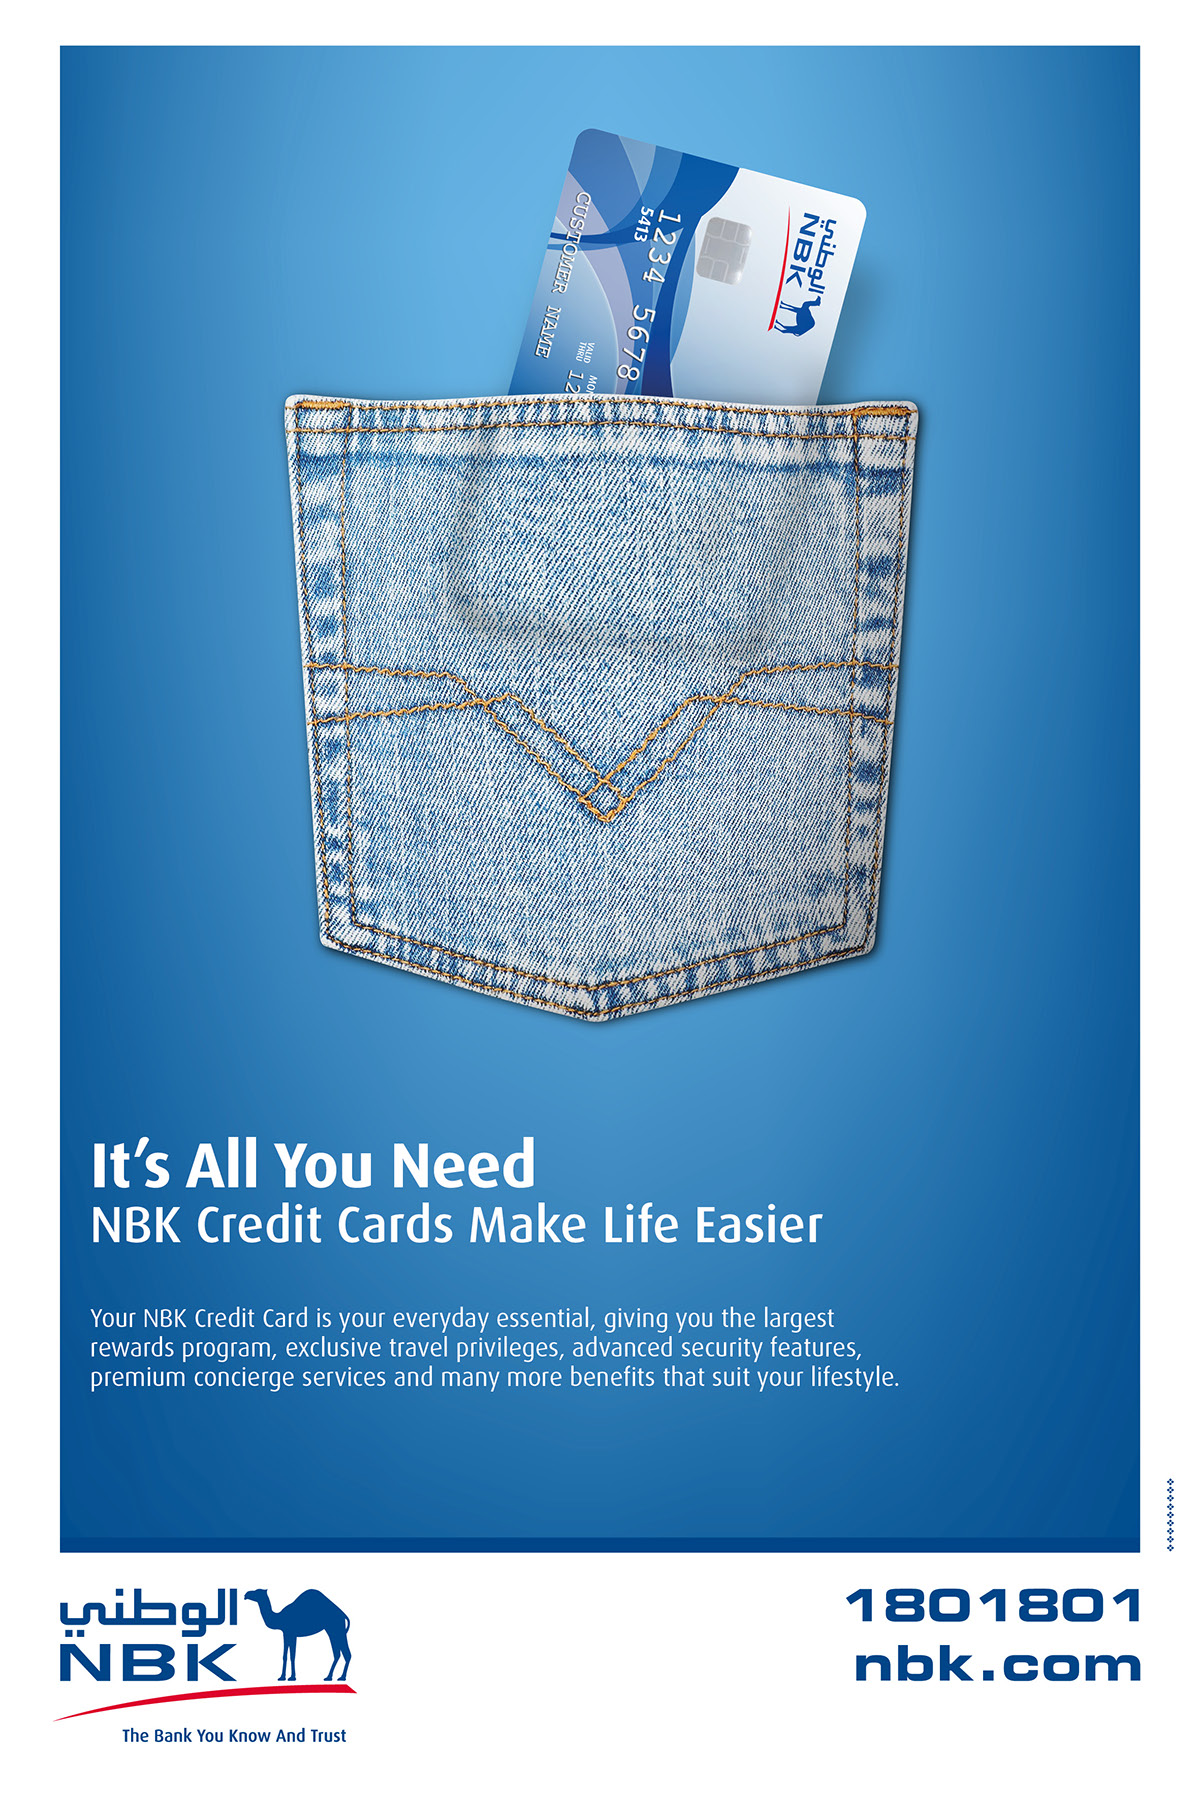 NBK cards life easier CGI